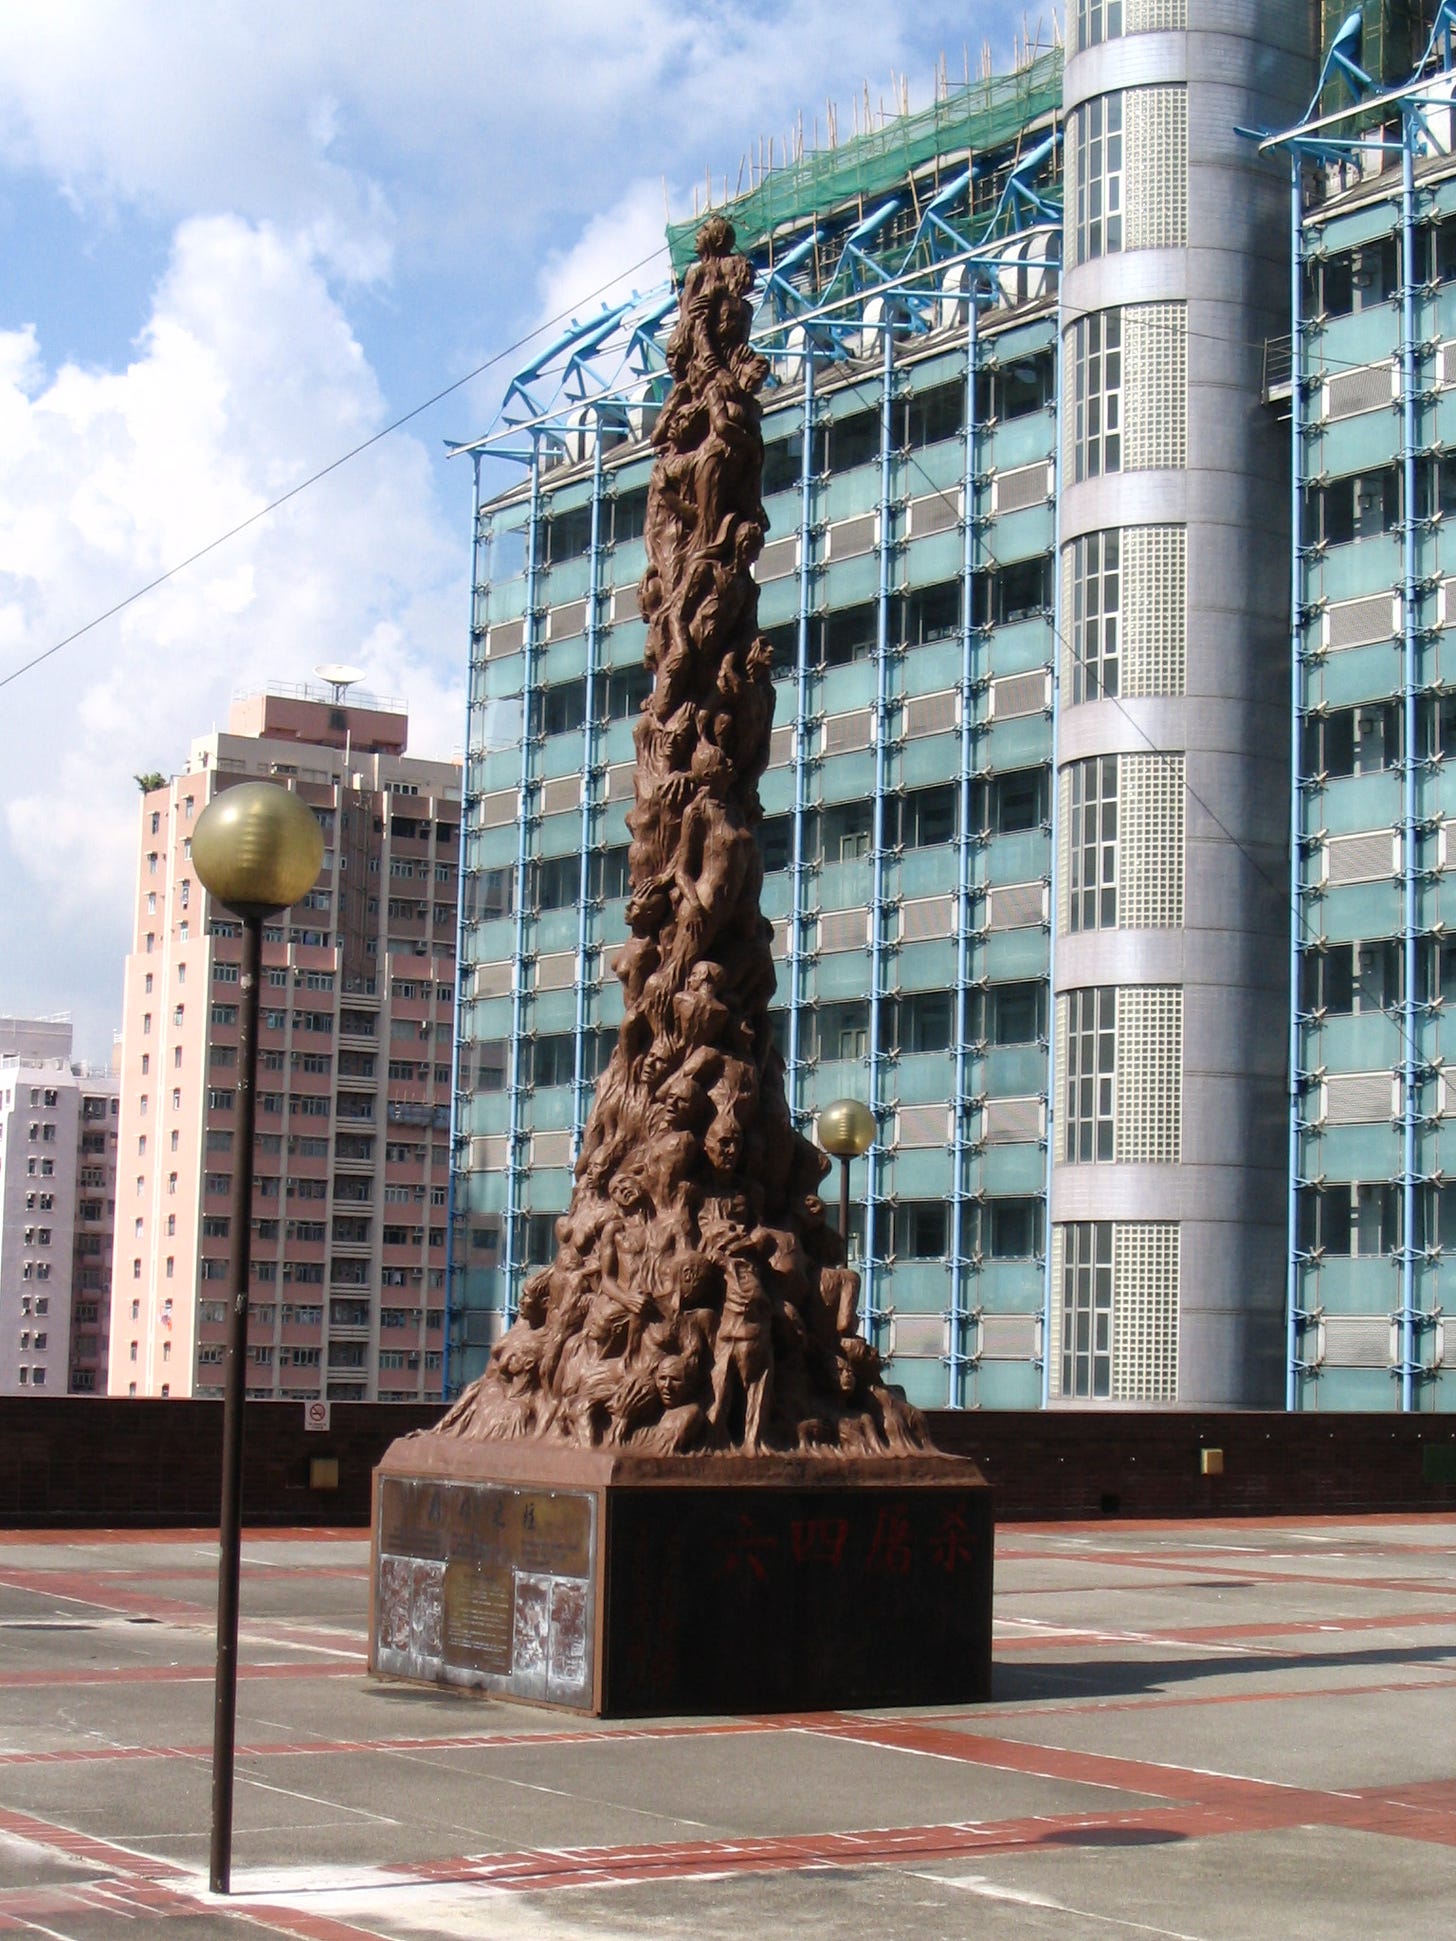 The original Pillar of Shame at the University of Hong Kong before it was painted orange. (Image: Minghong, CC BY-SA 4.0, via Wikimedia Commons)